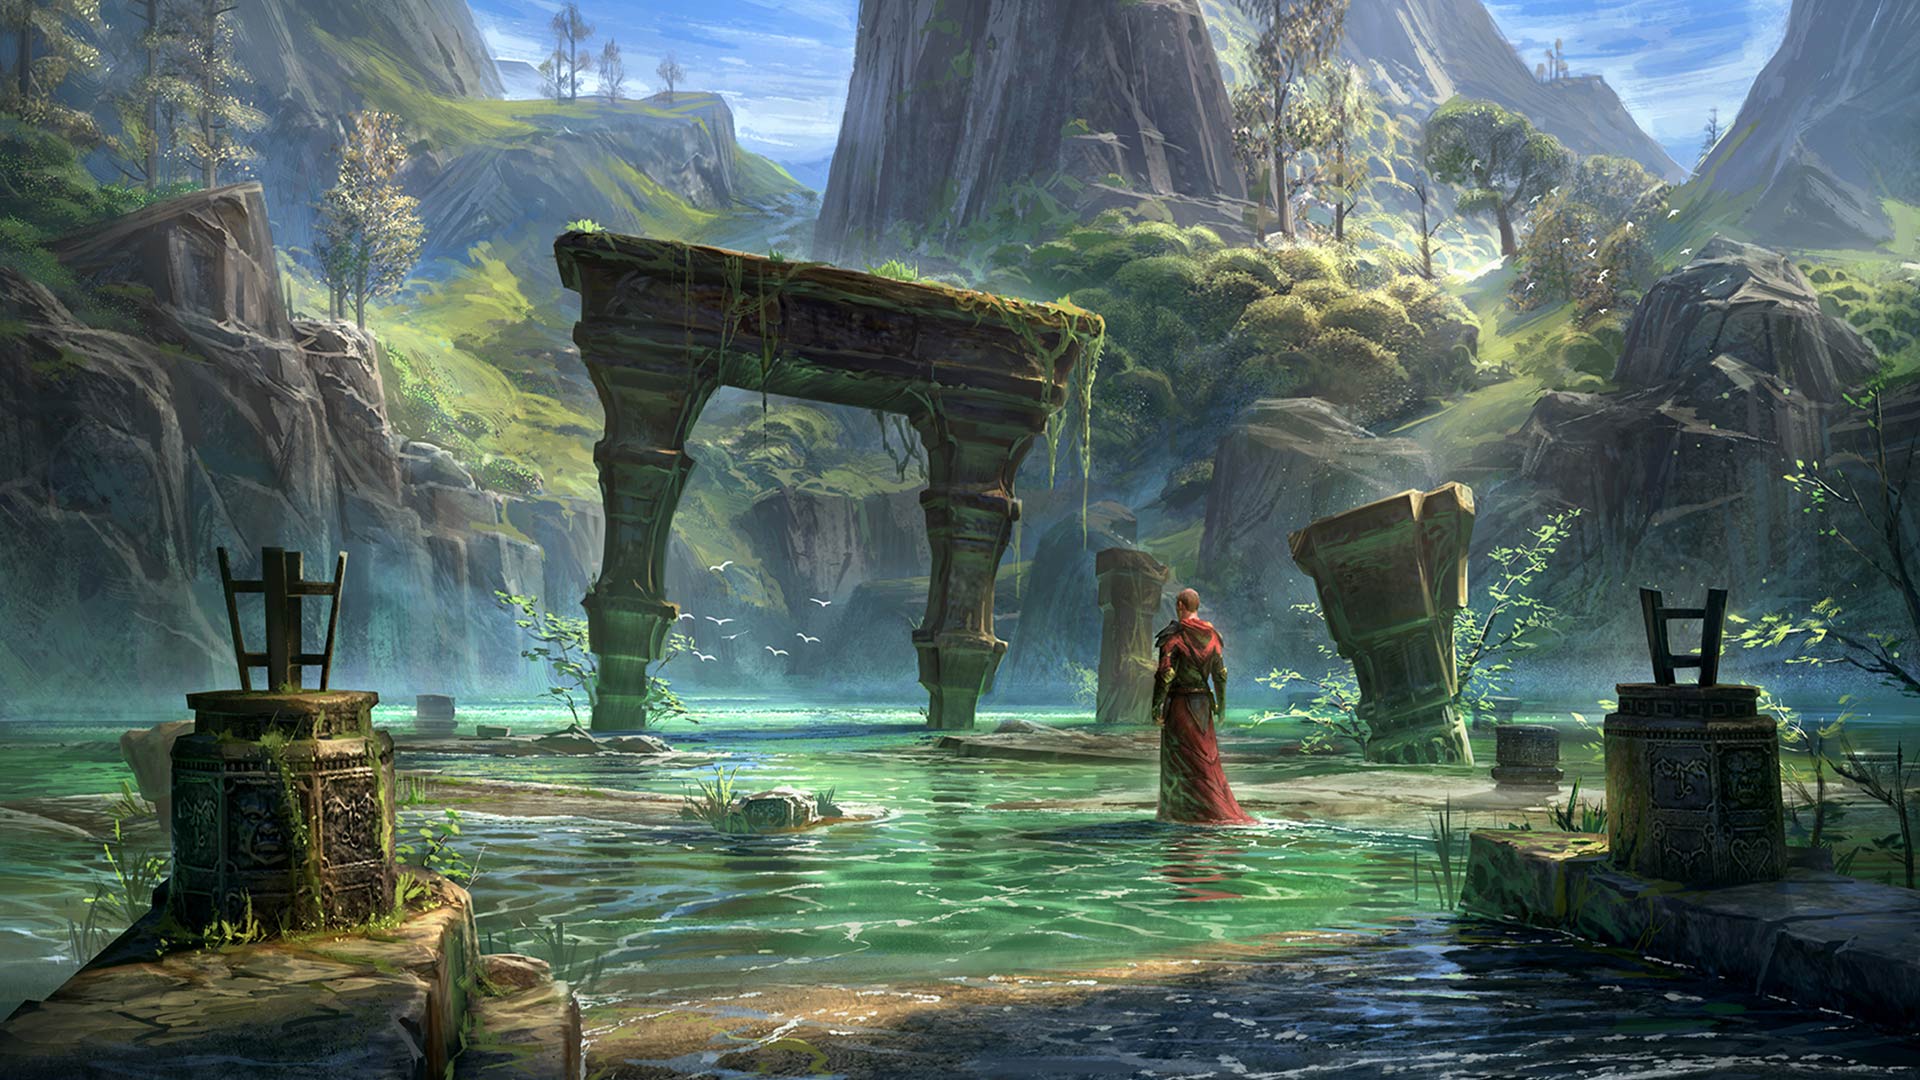 Steam :: The Elder Scrolls Online :: Evenementen